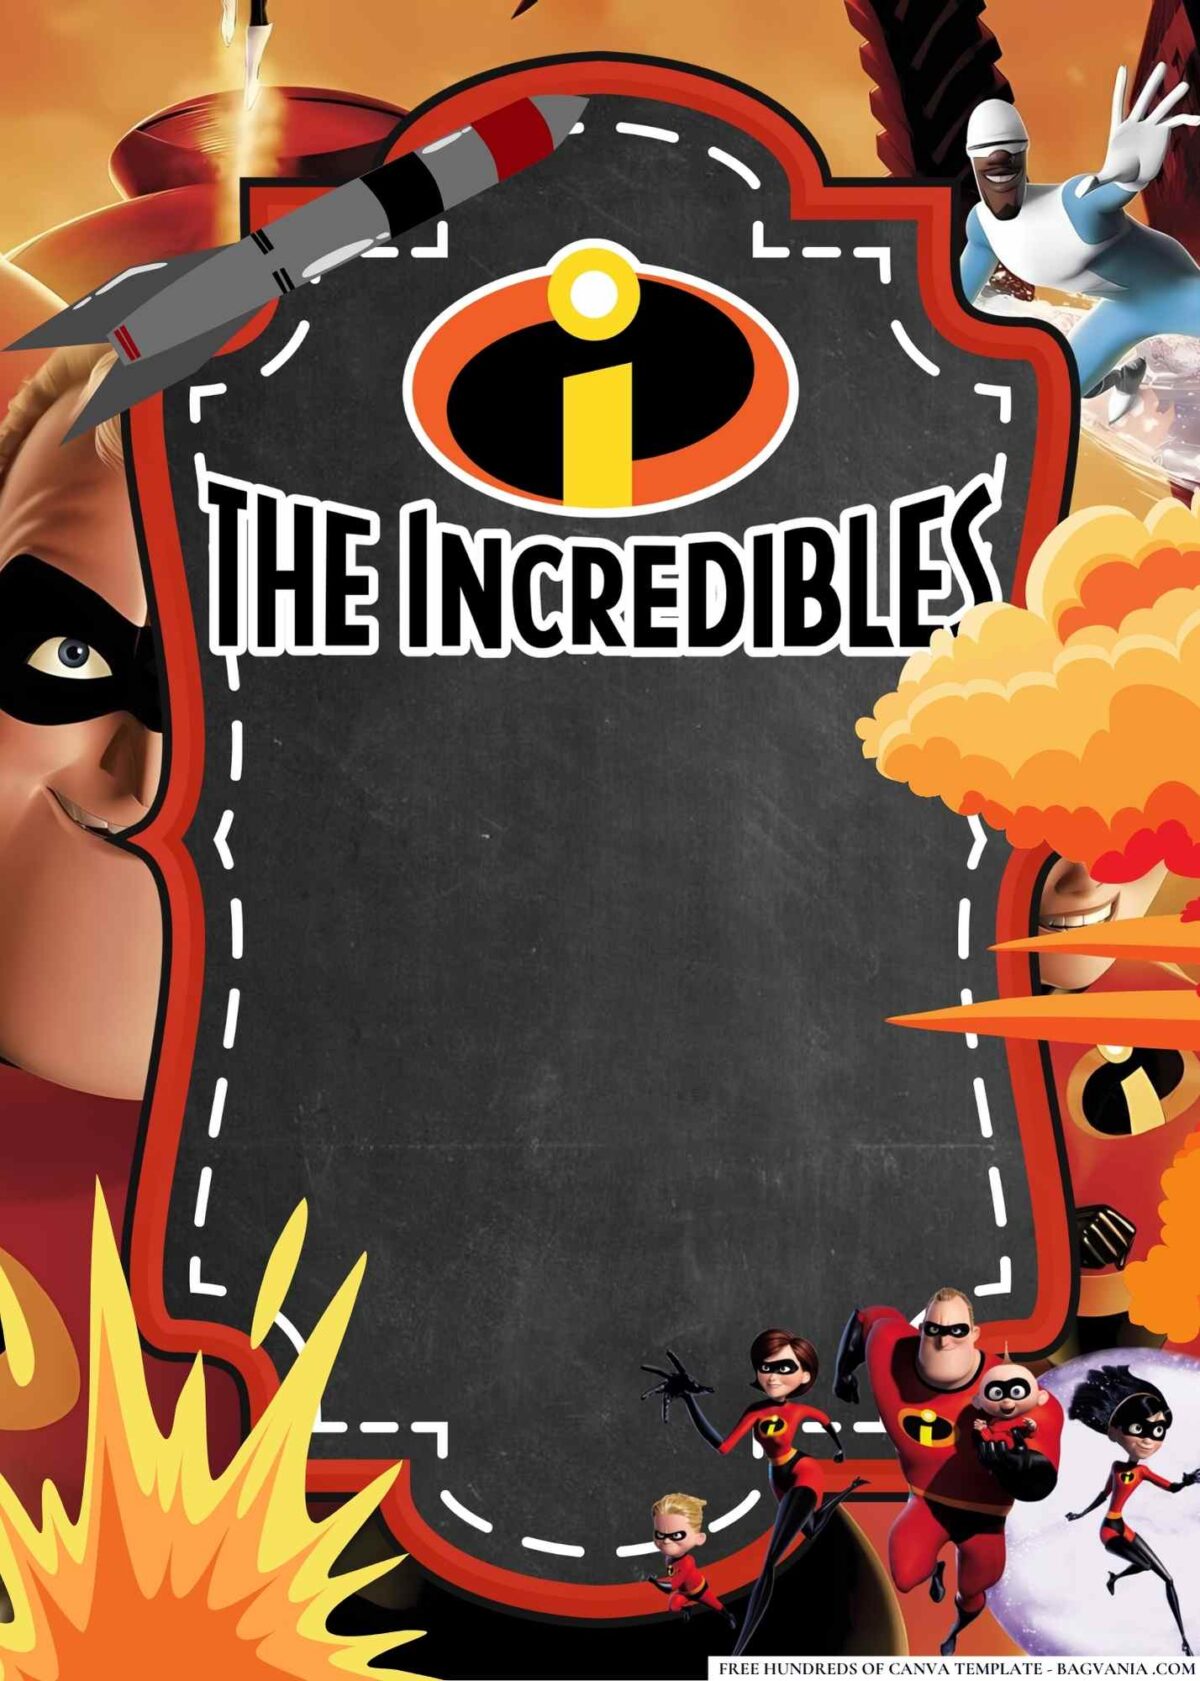 FREE Editable The Incredibles Birthday Invitations